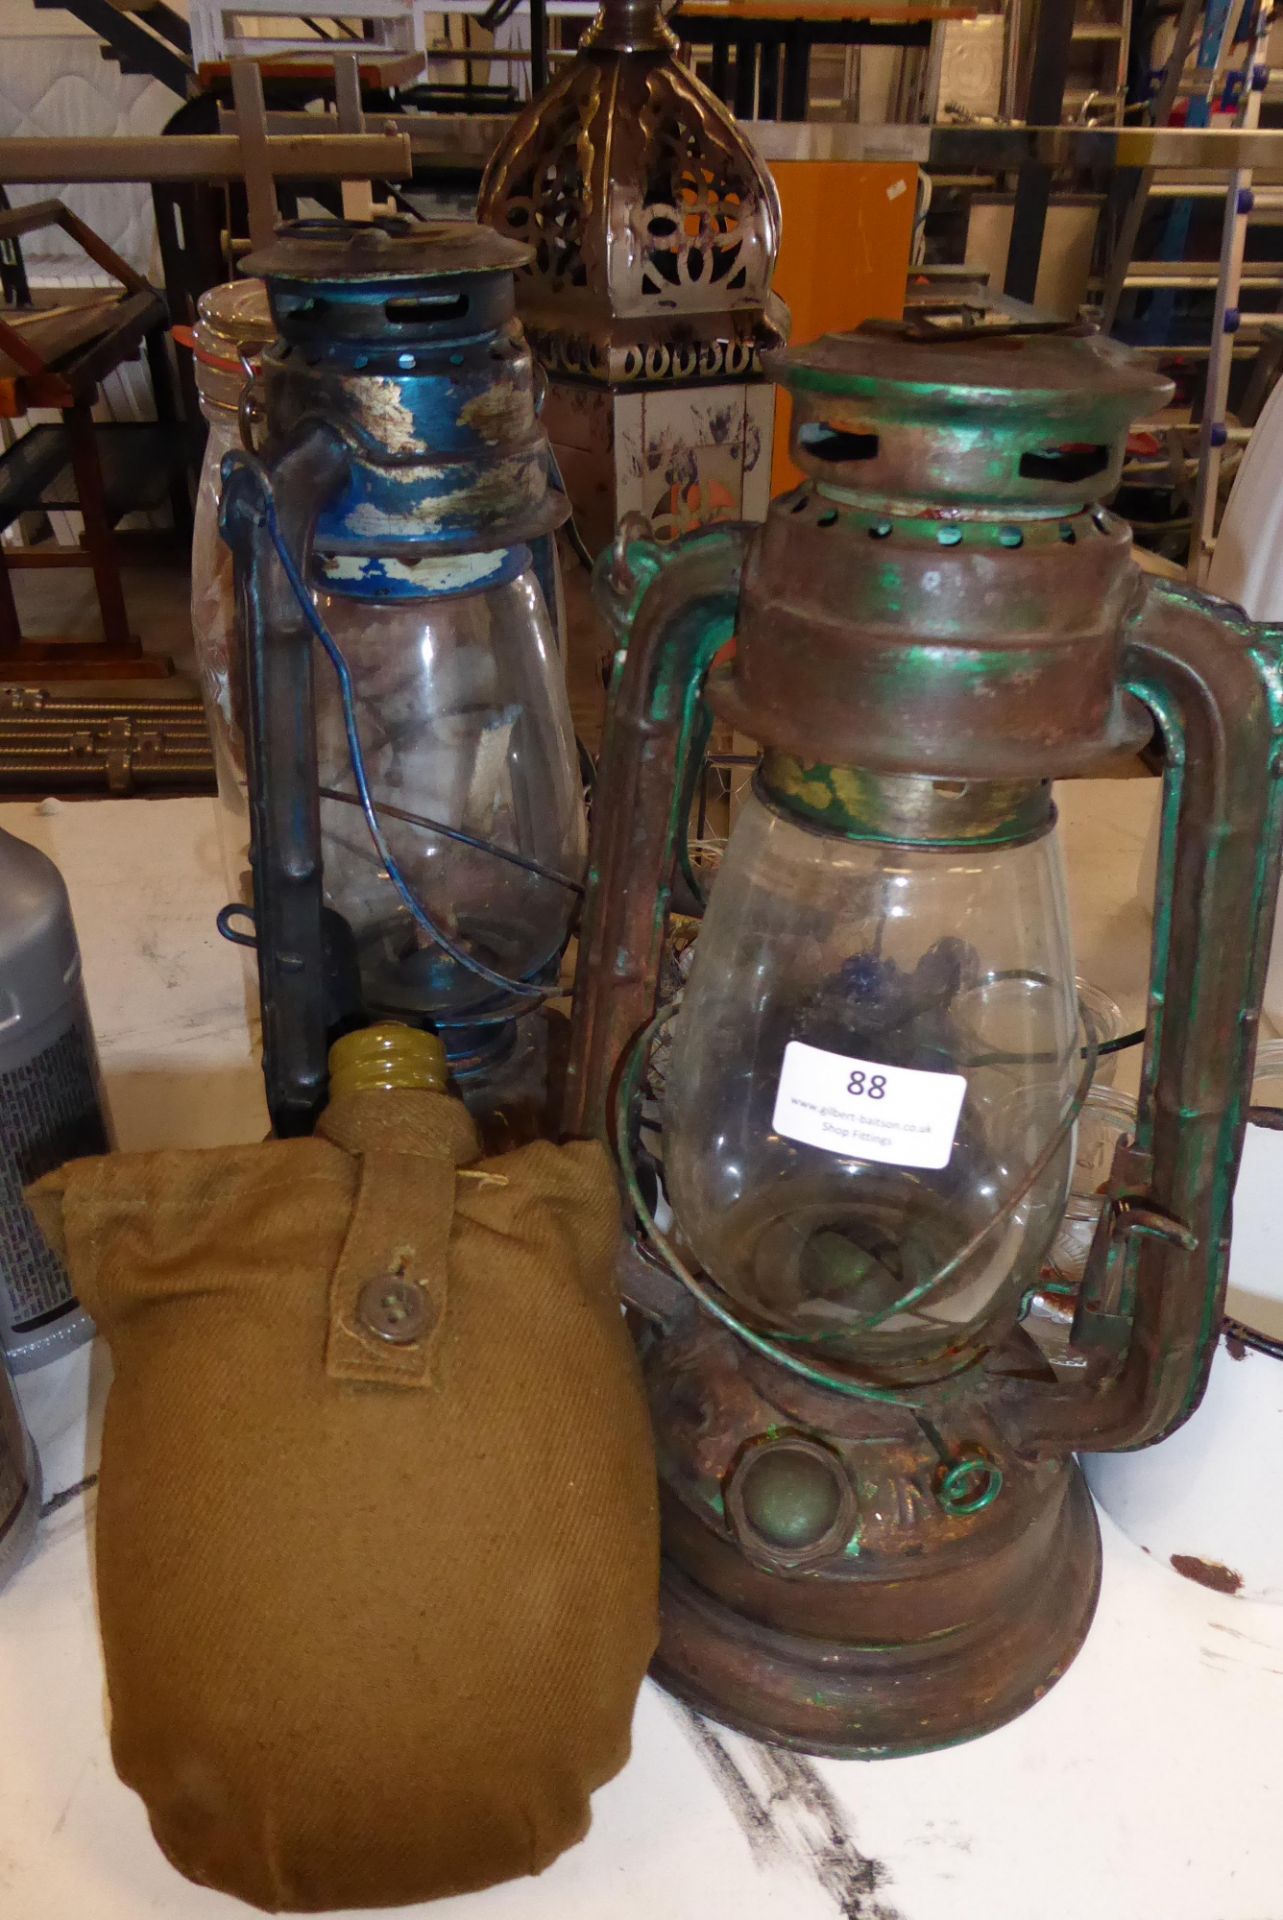 * Lanterns and other display items eg. Jars, shells, etc.